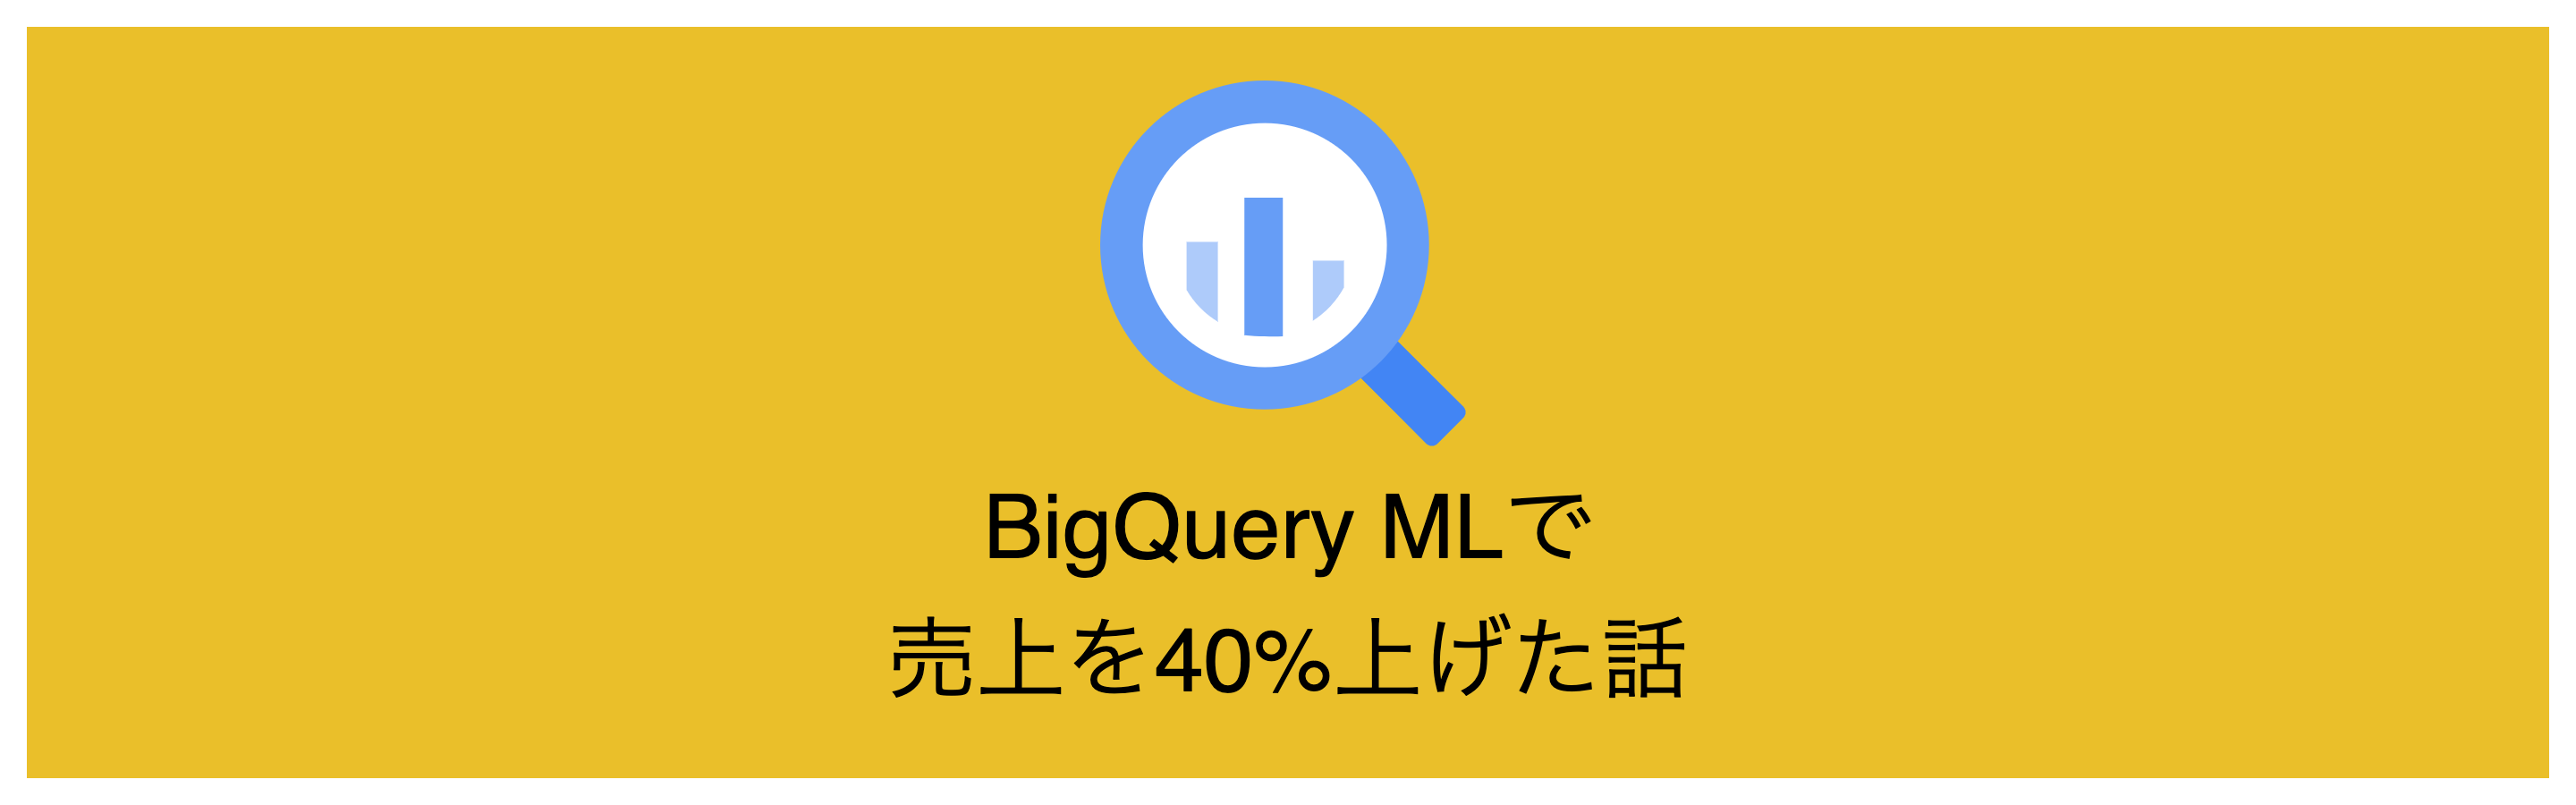 BigQuery MLで商品一覧画面の並び順を改善して売上を40%上げた話